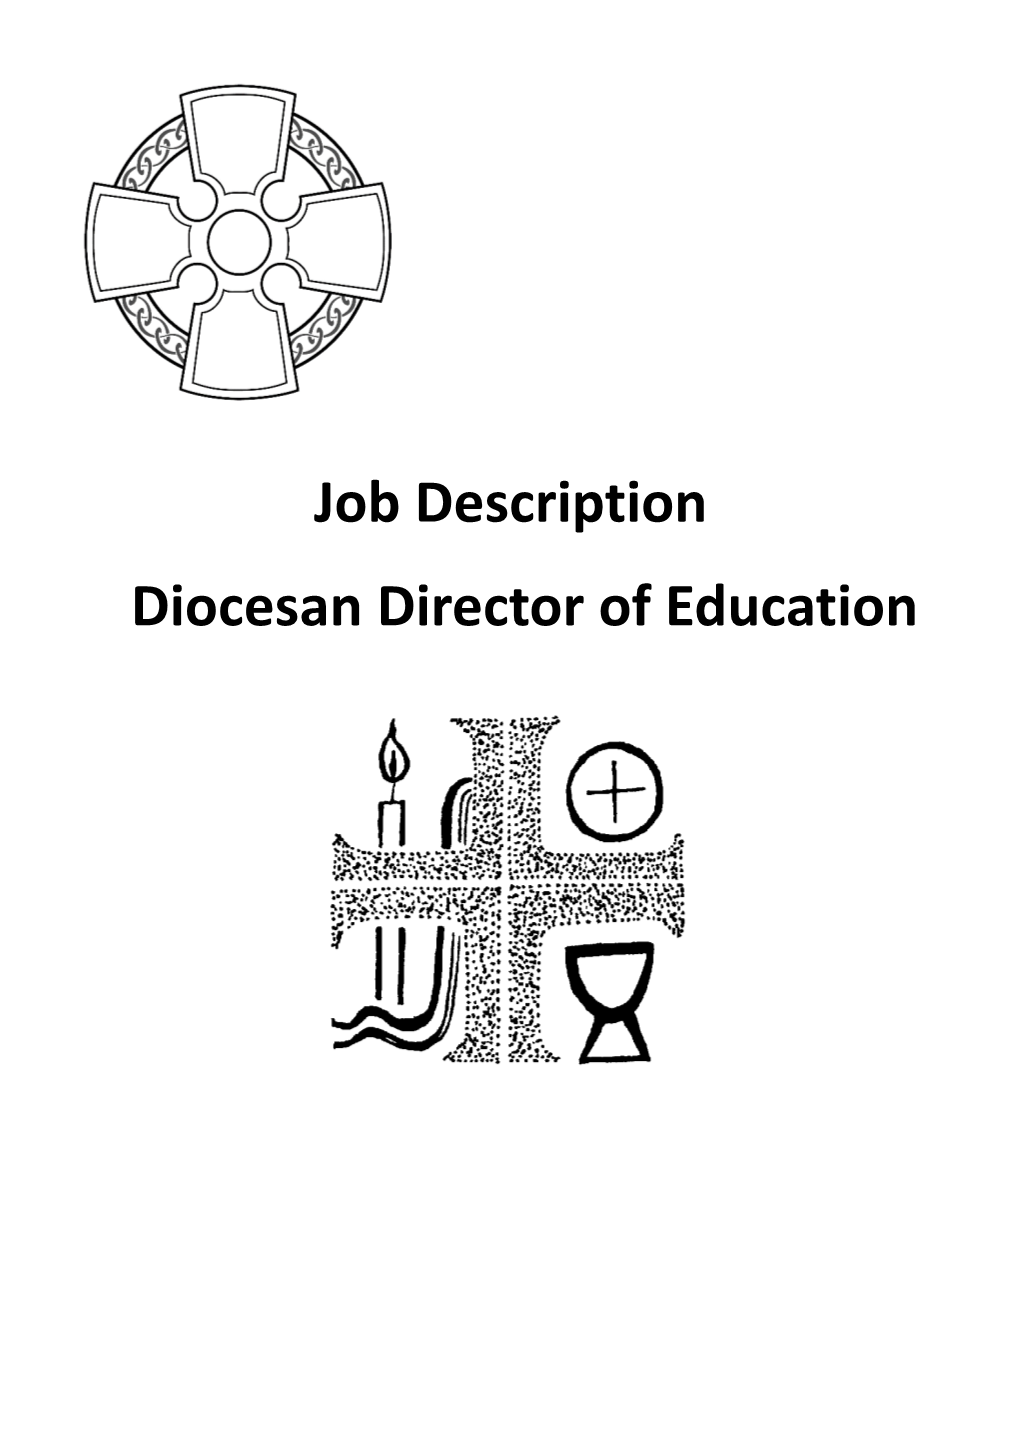 Job Description Monmouth Diocesan Director of Education